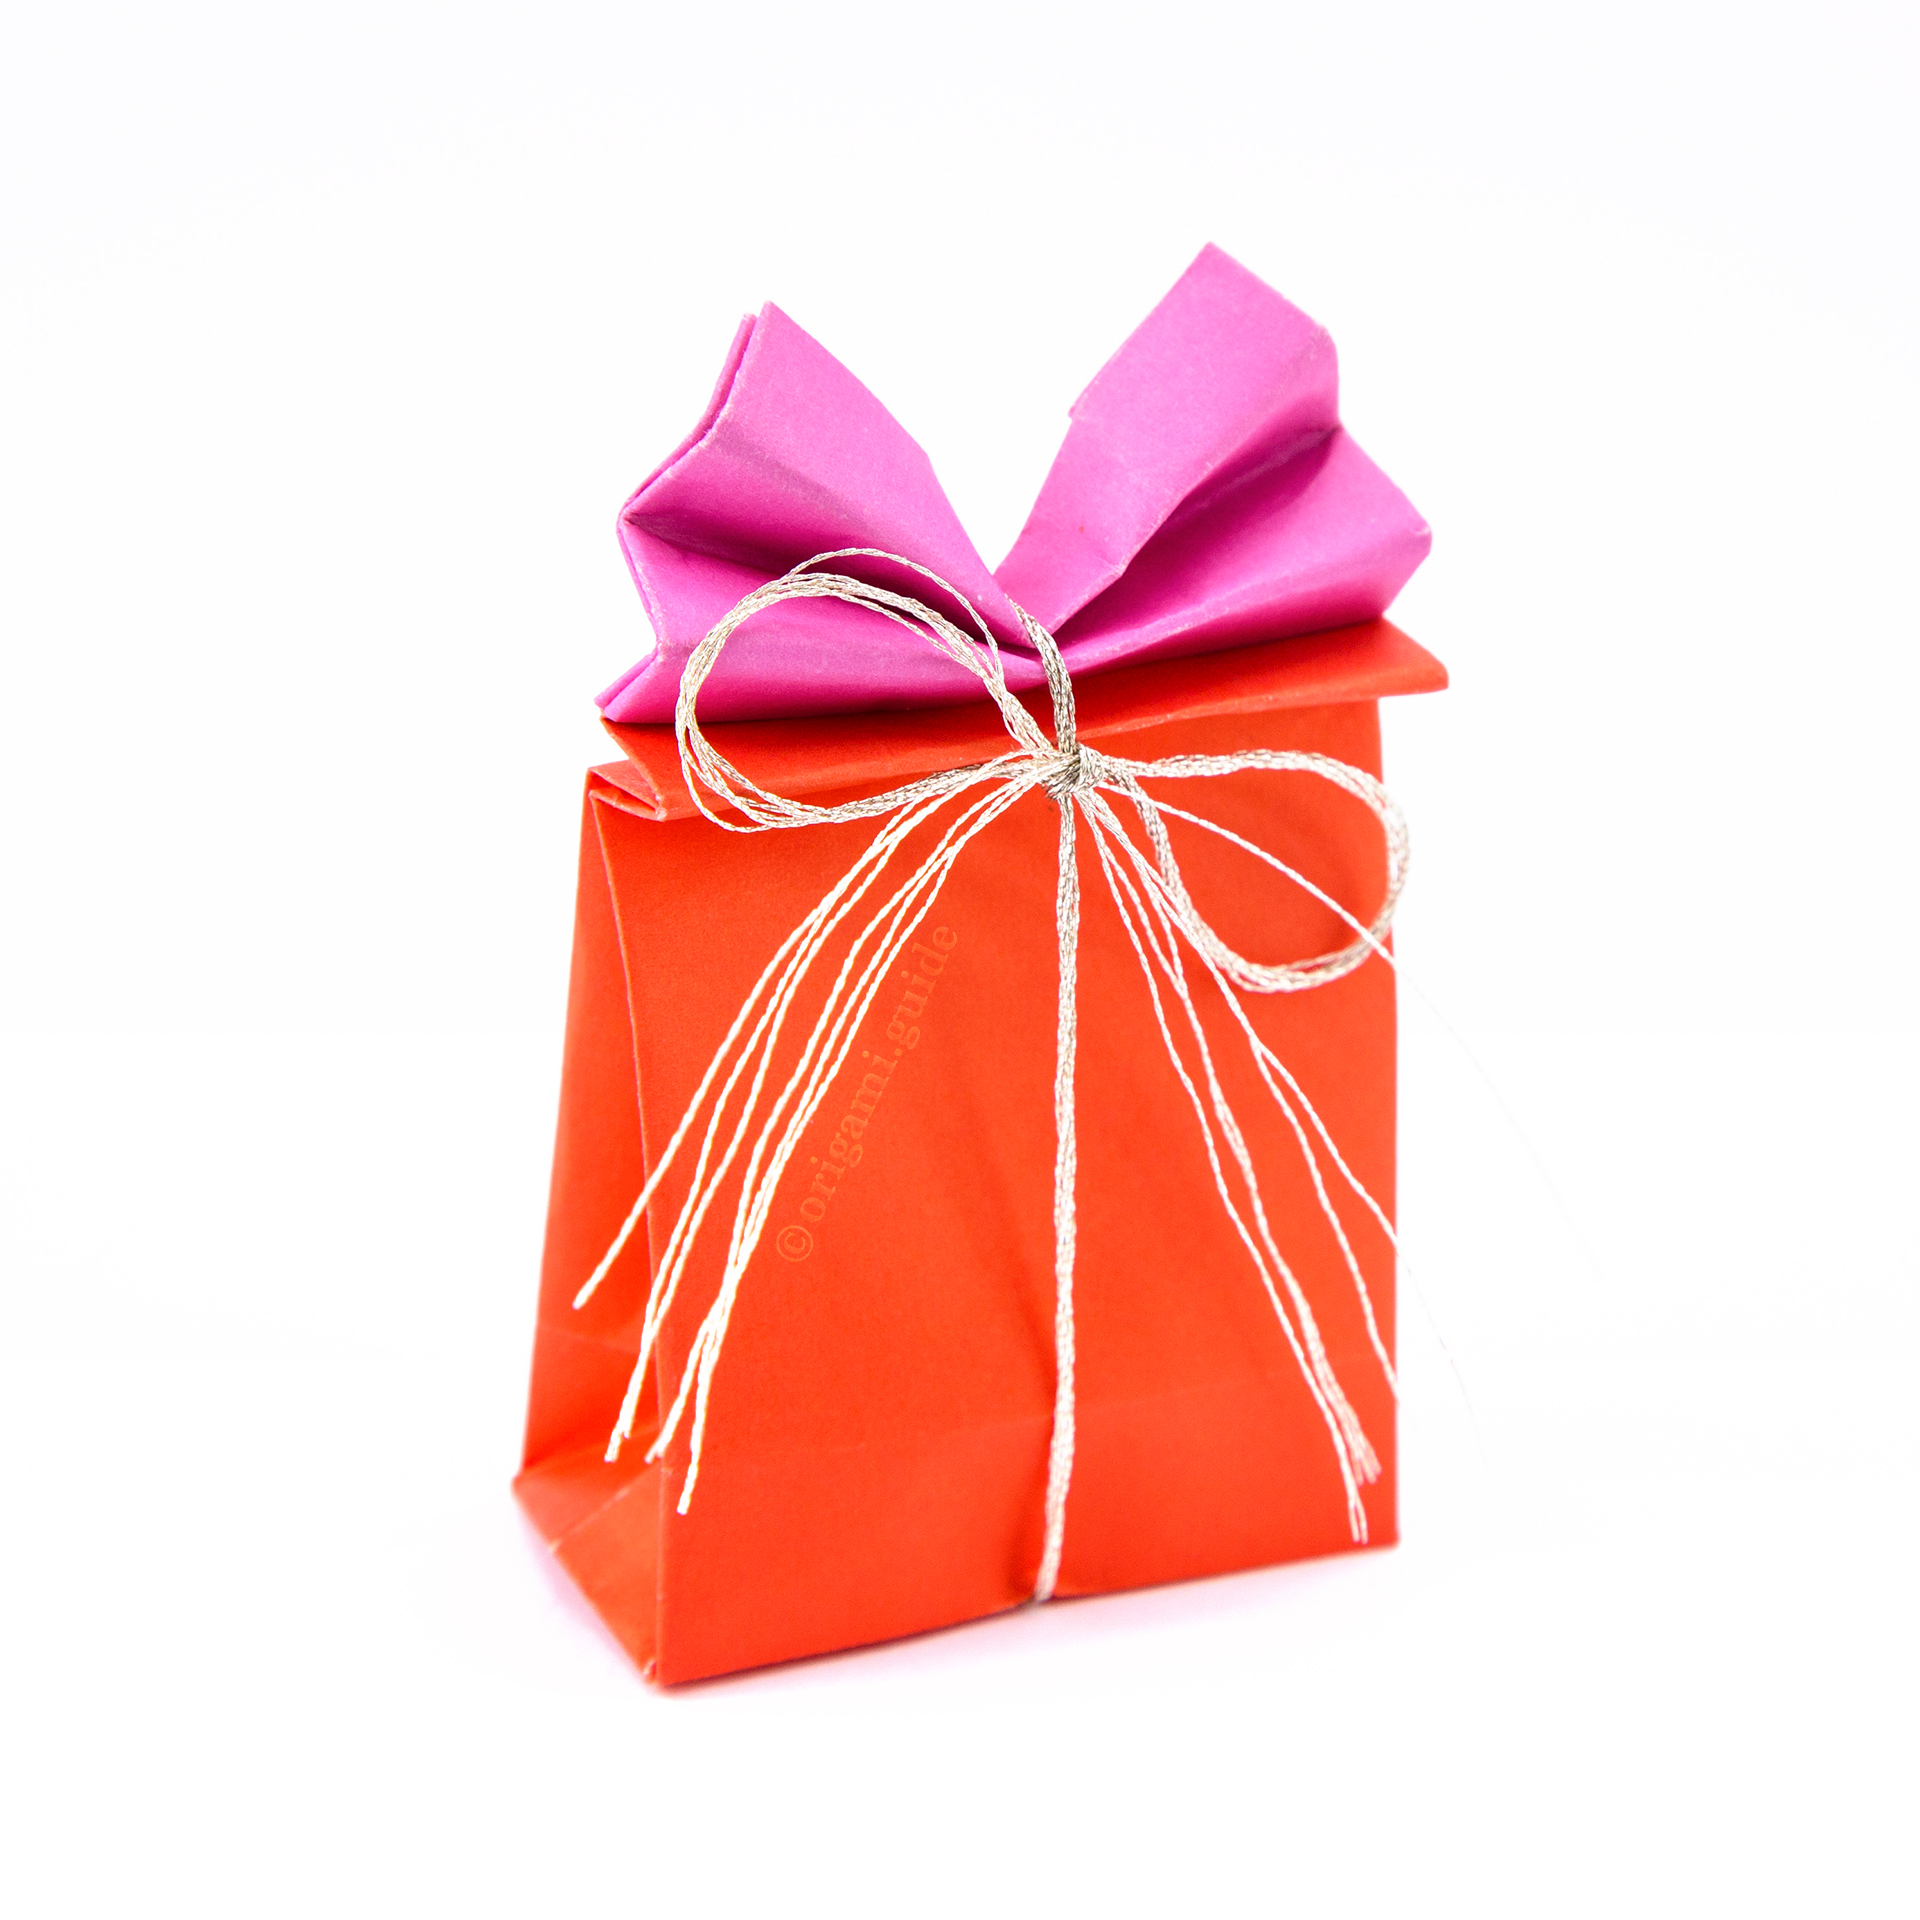 origami gift bag tutorial 00